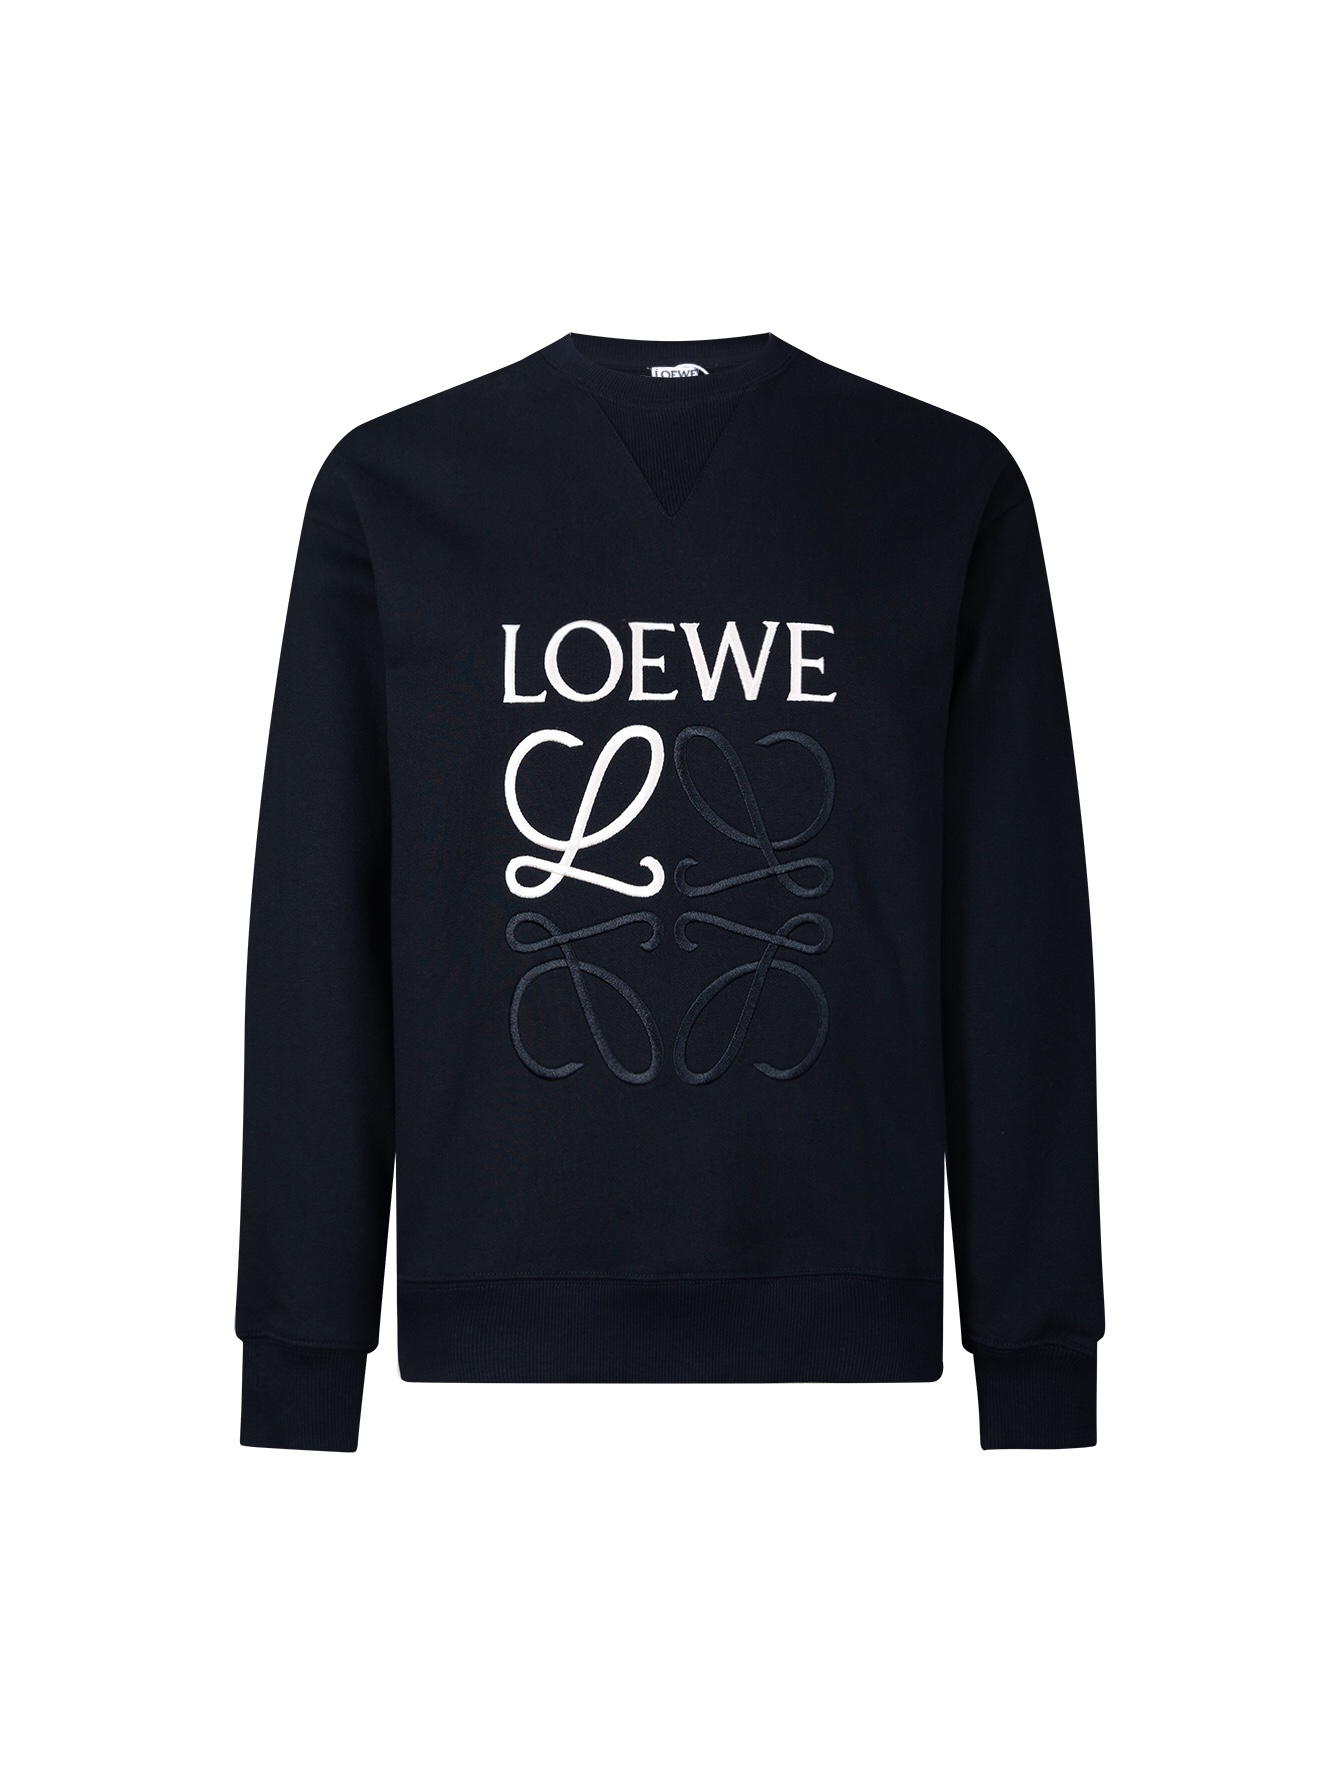 Loewe Clothing Sweatshirts Apricot Color Black White Embroidery Unisex Cotton